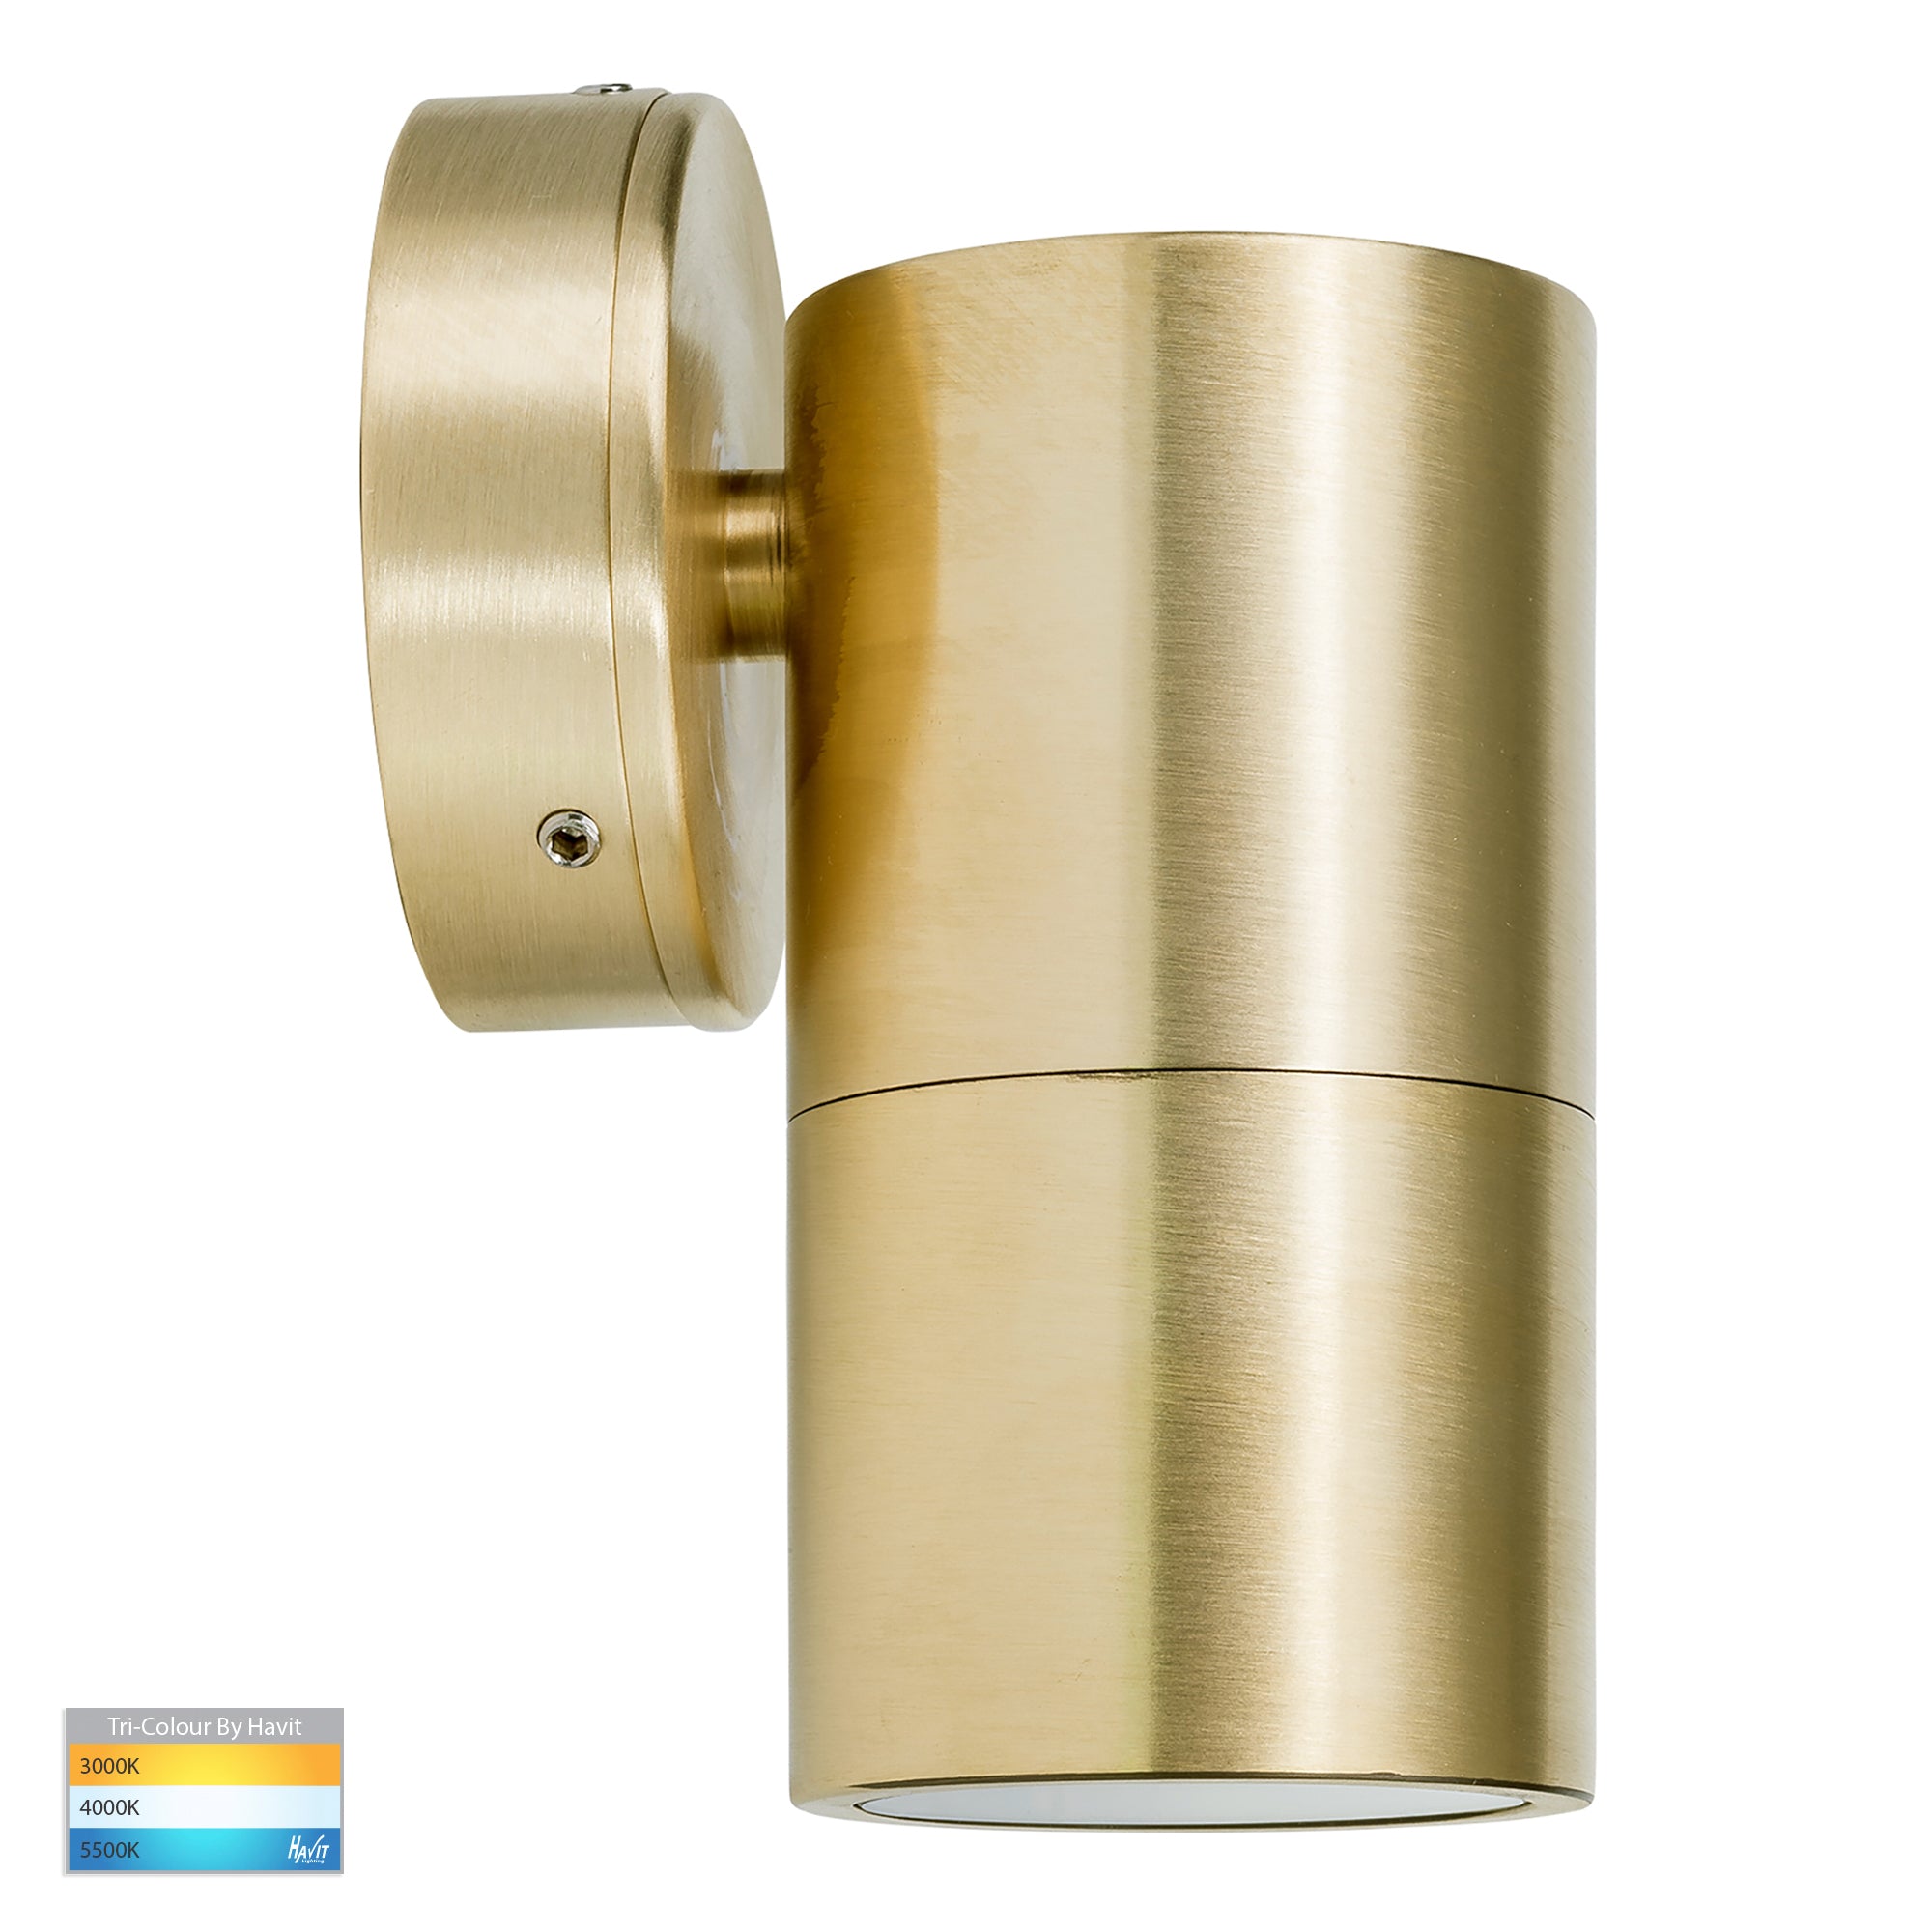 HV1155T-HV1157T - Tivah Solid Brass TRI Colour Fixed Down Wall Pillar Lights